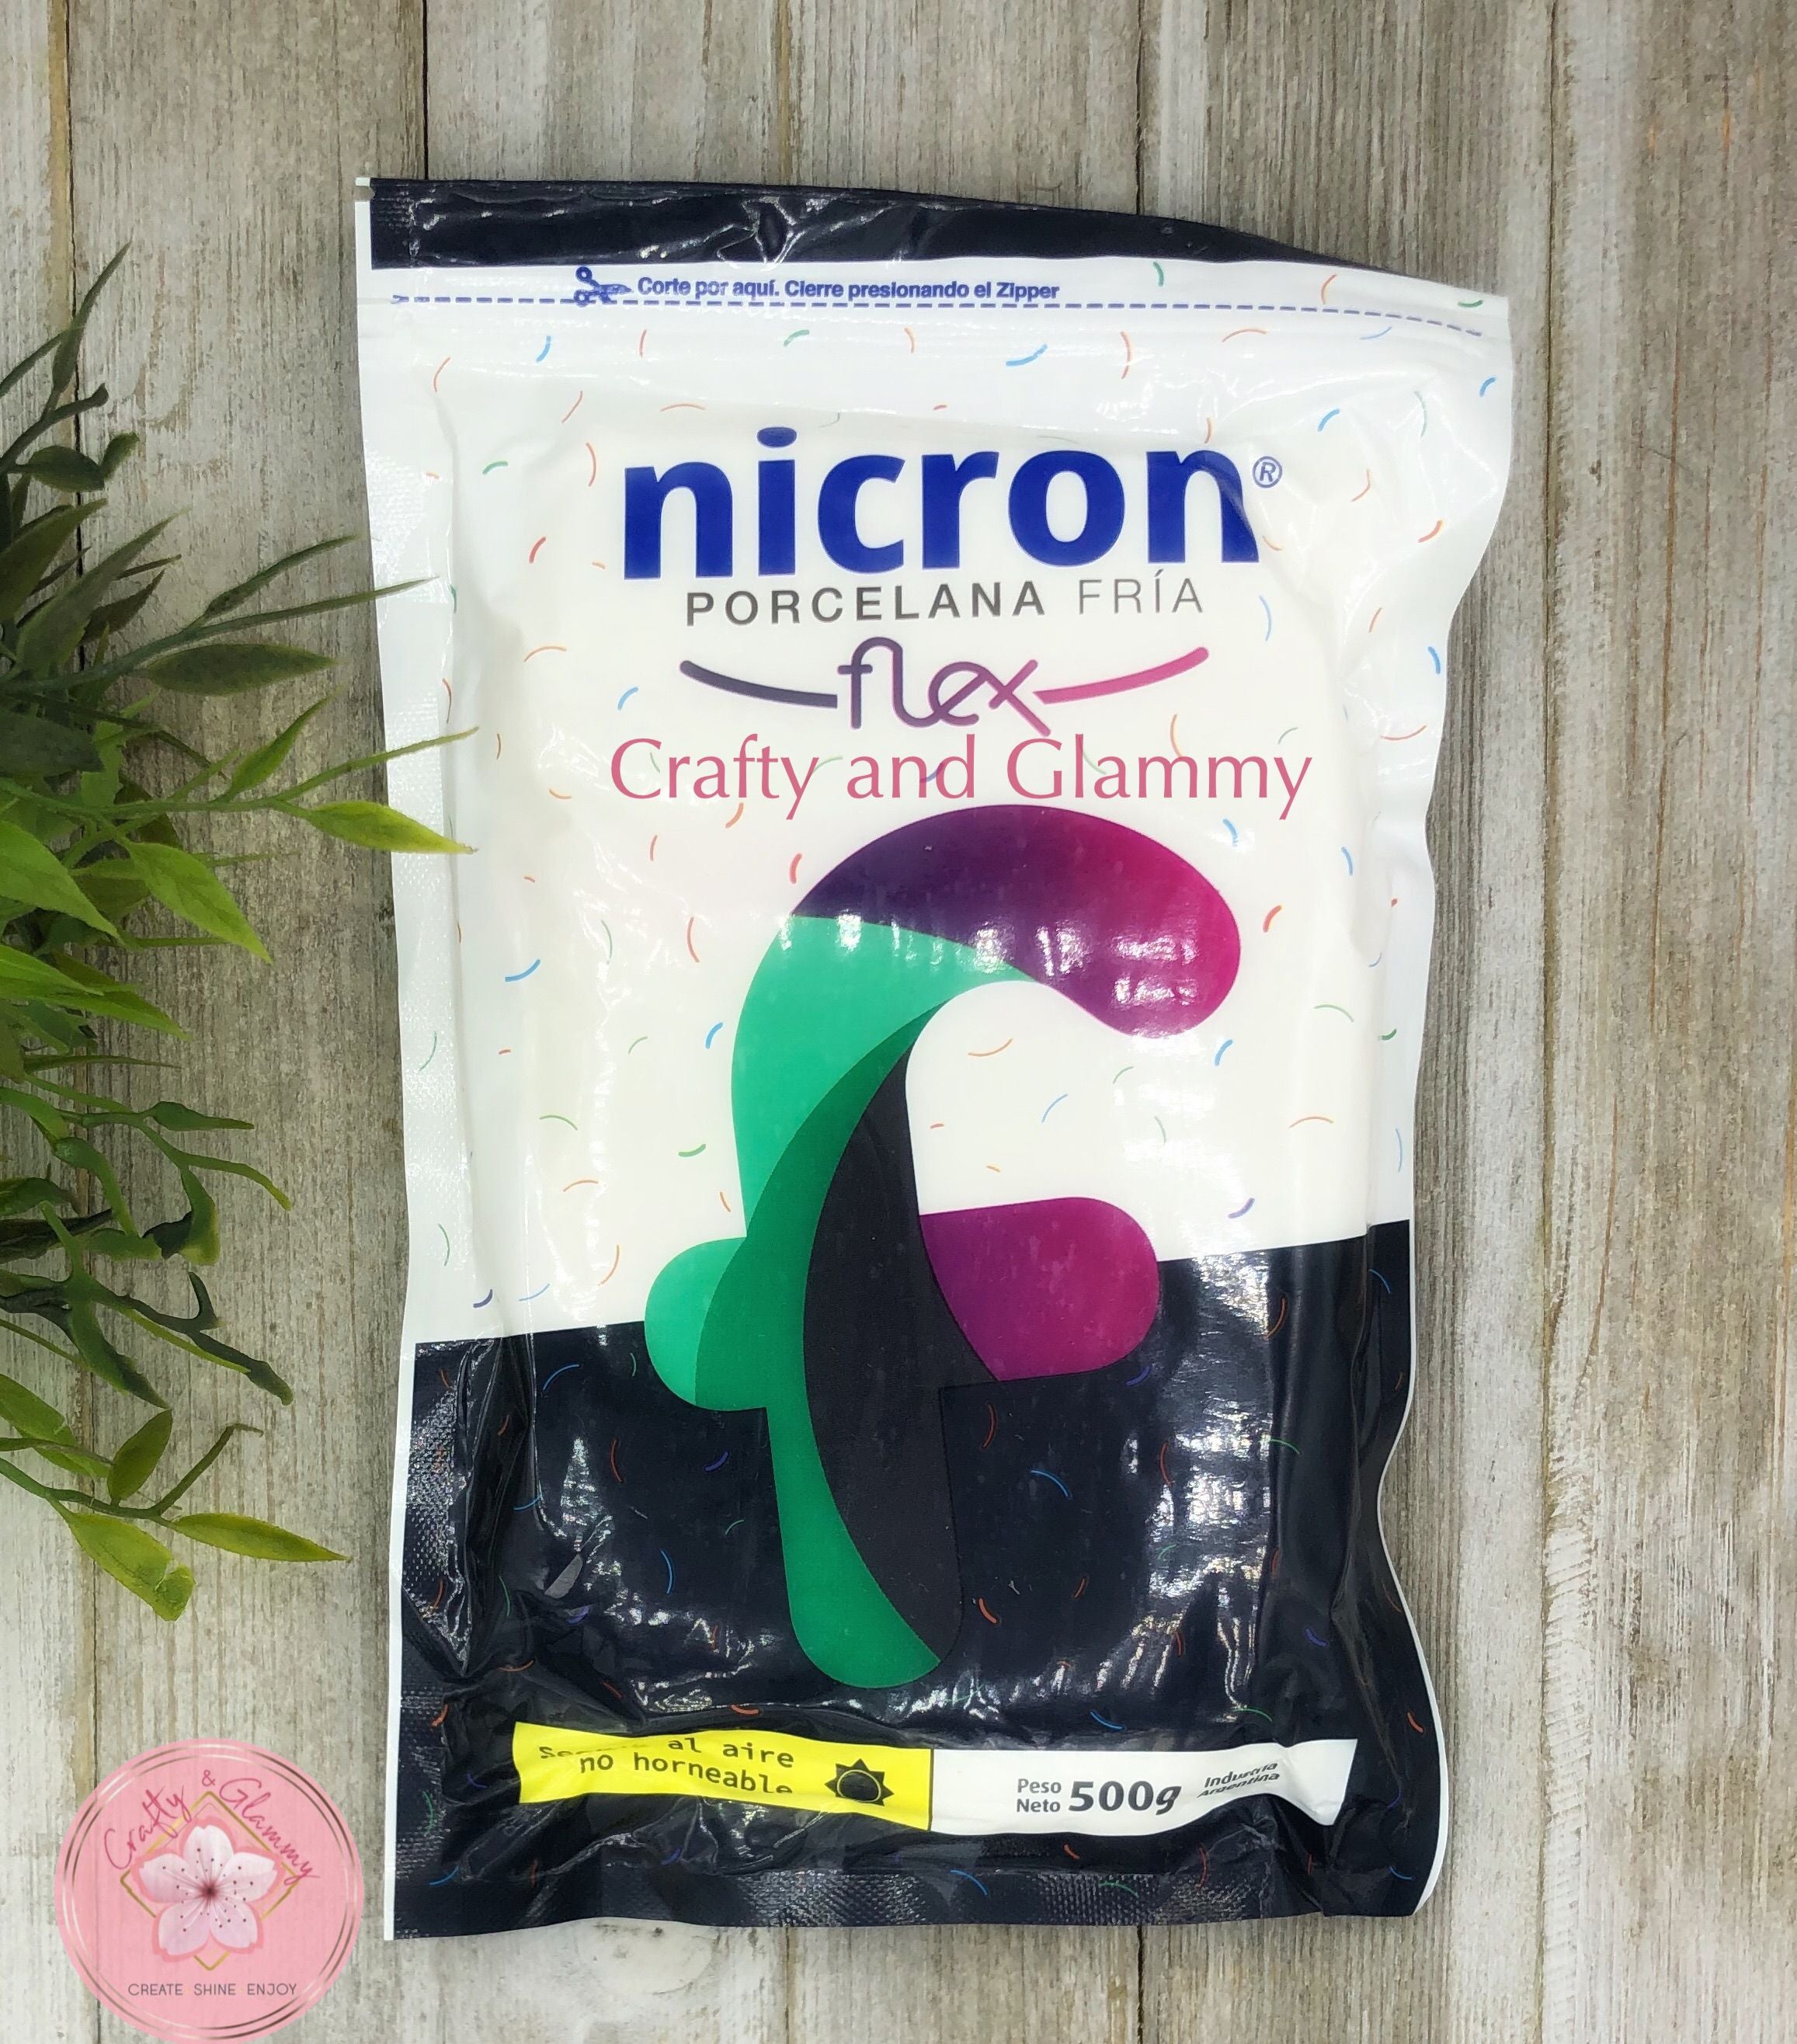 Flexible cold porcelain Nicron Flex similar to polymer clay